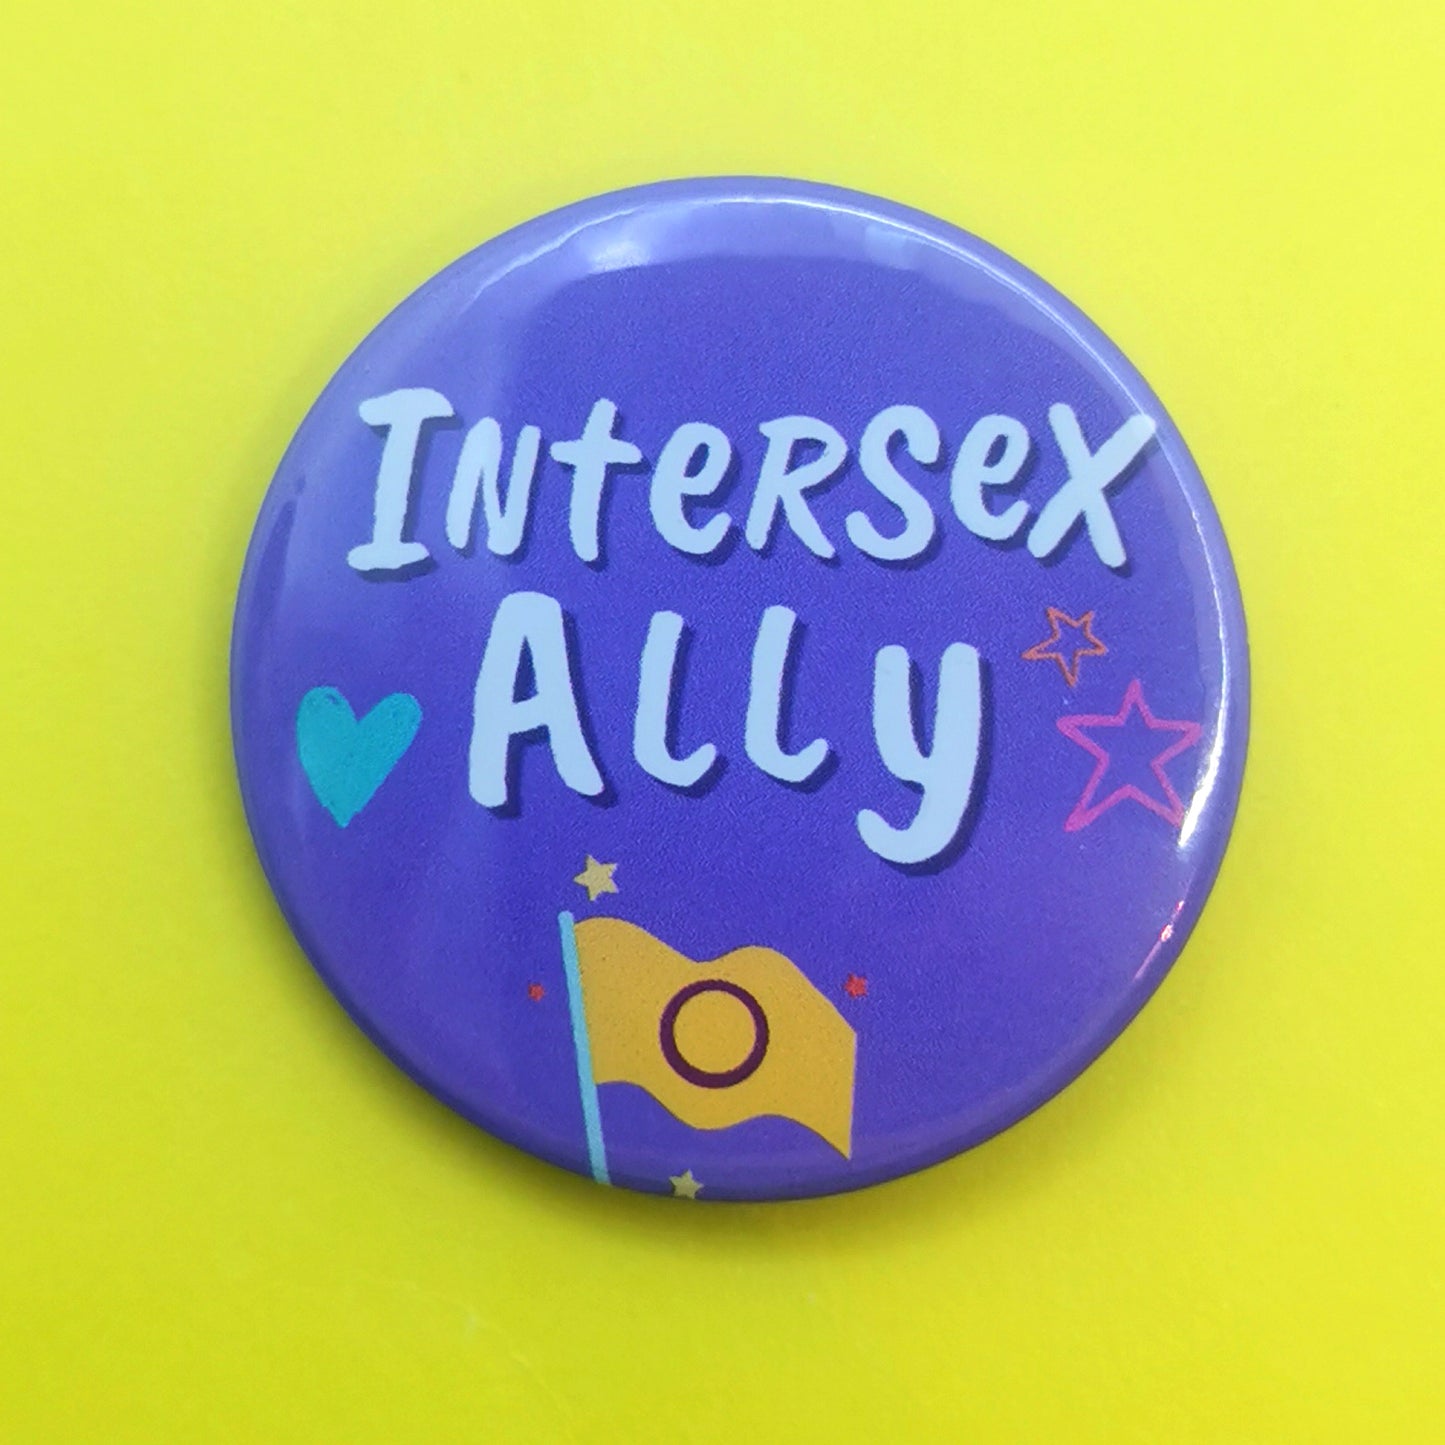 Ally badges